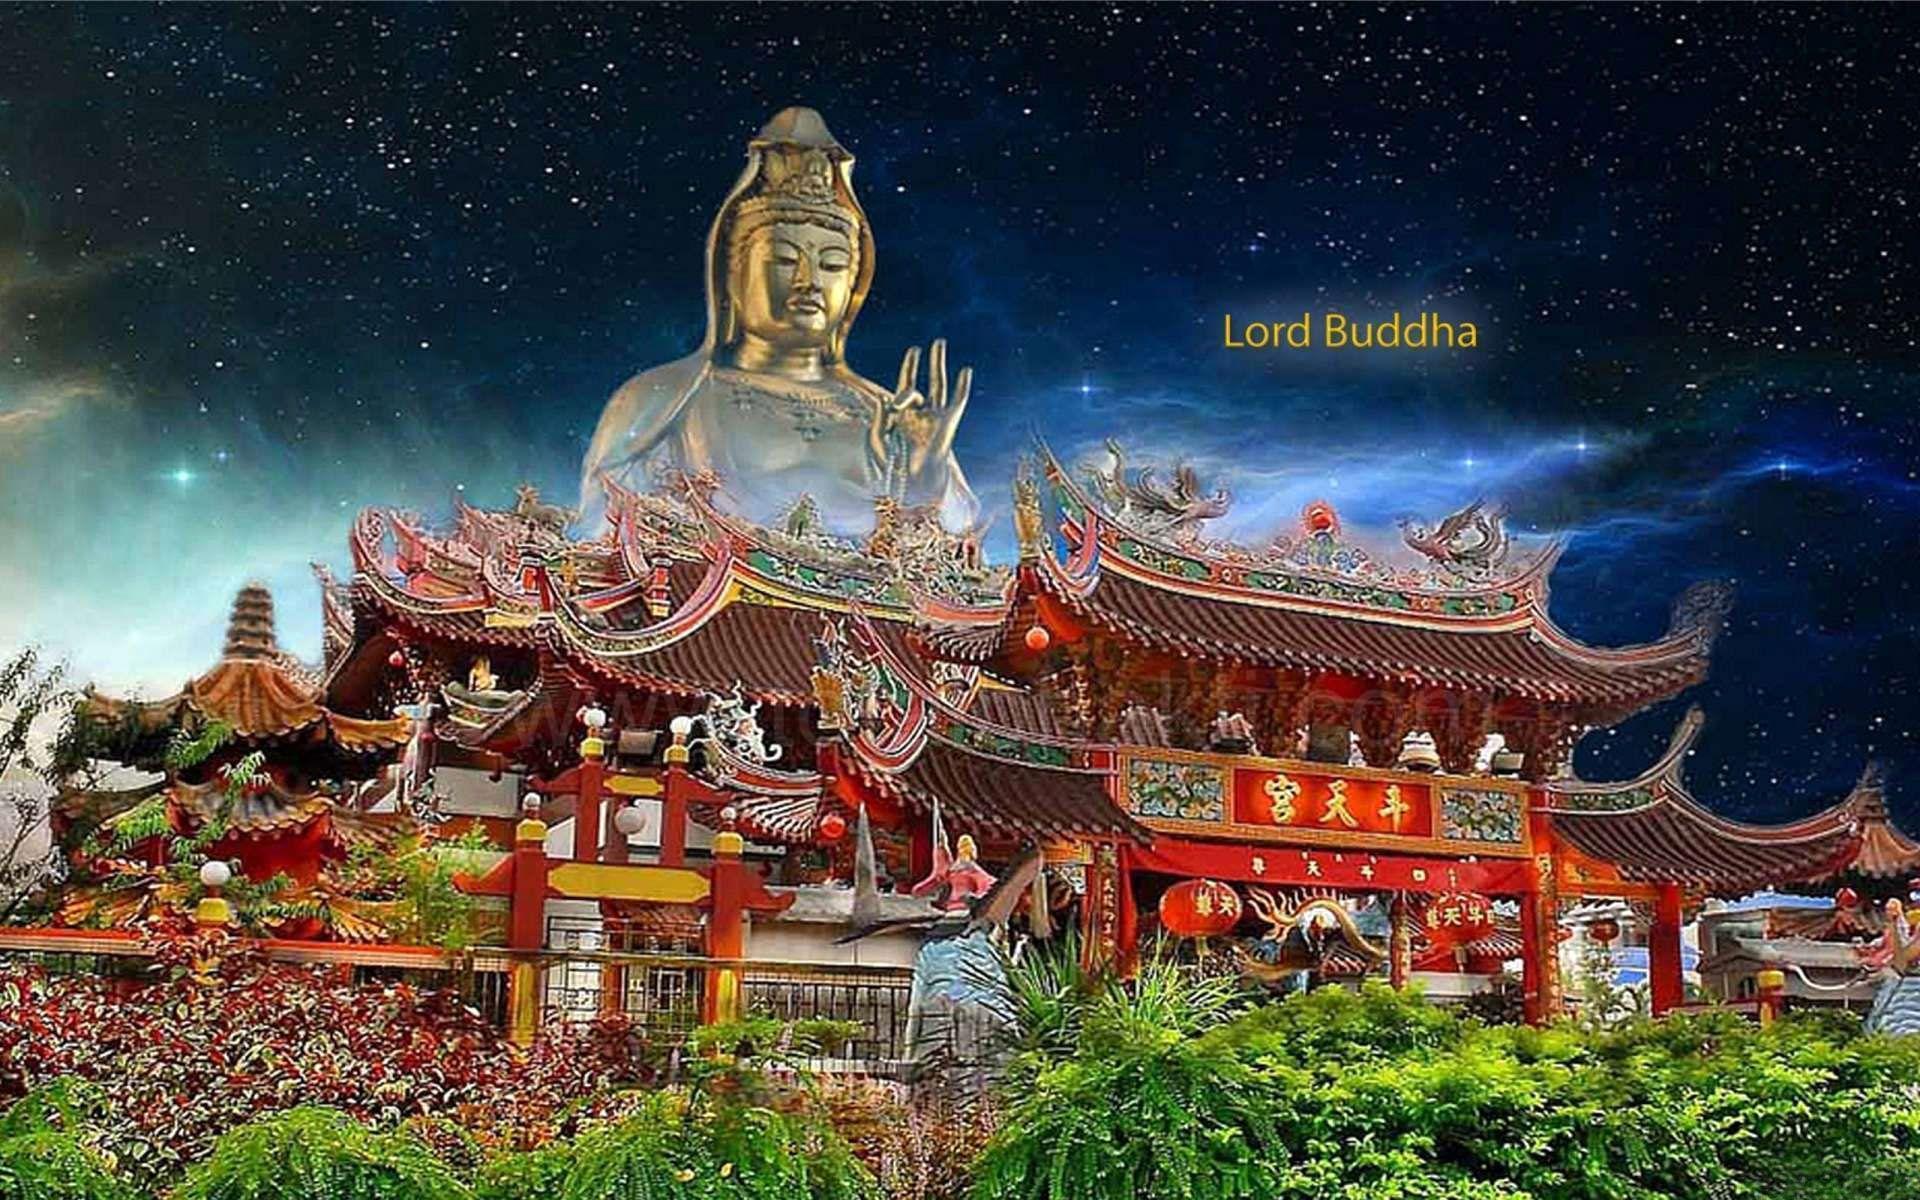 Lord Buddha Wallpaper, photo & image free download